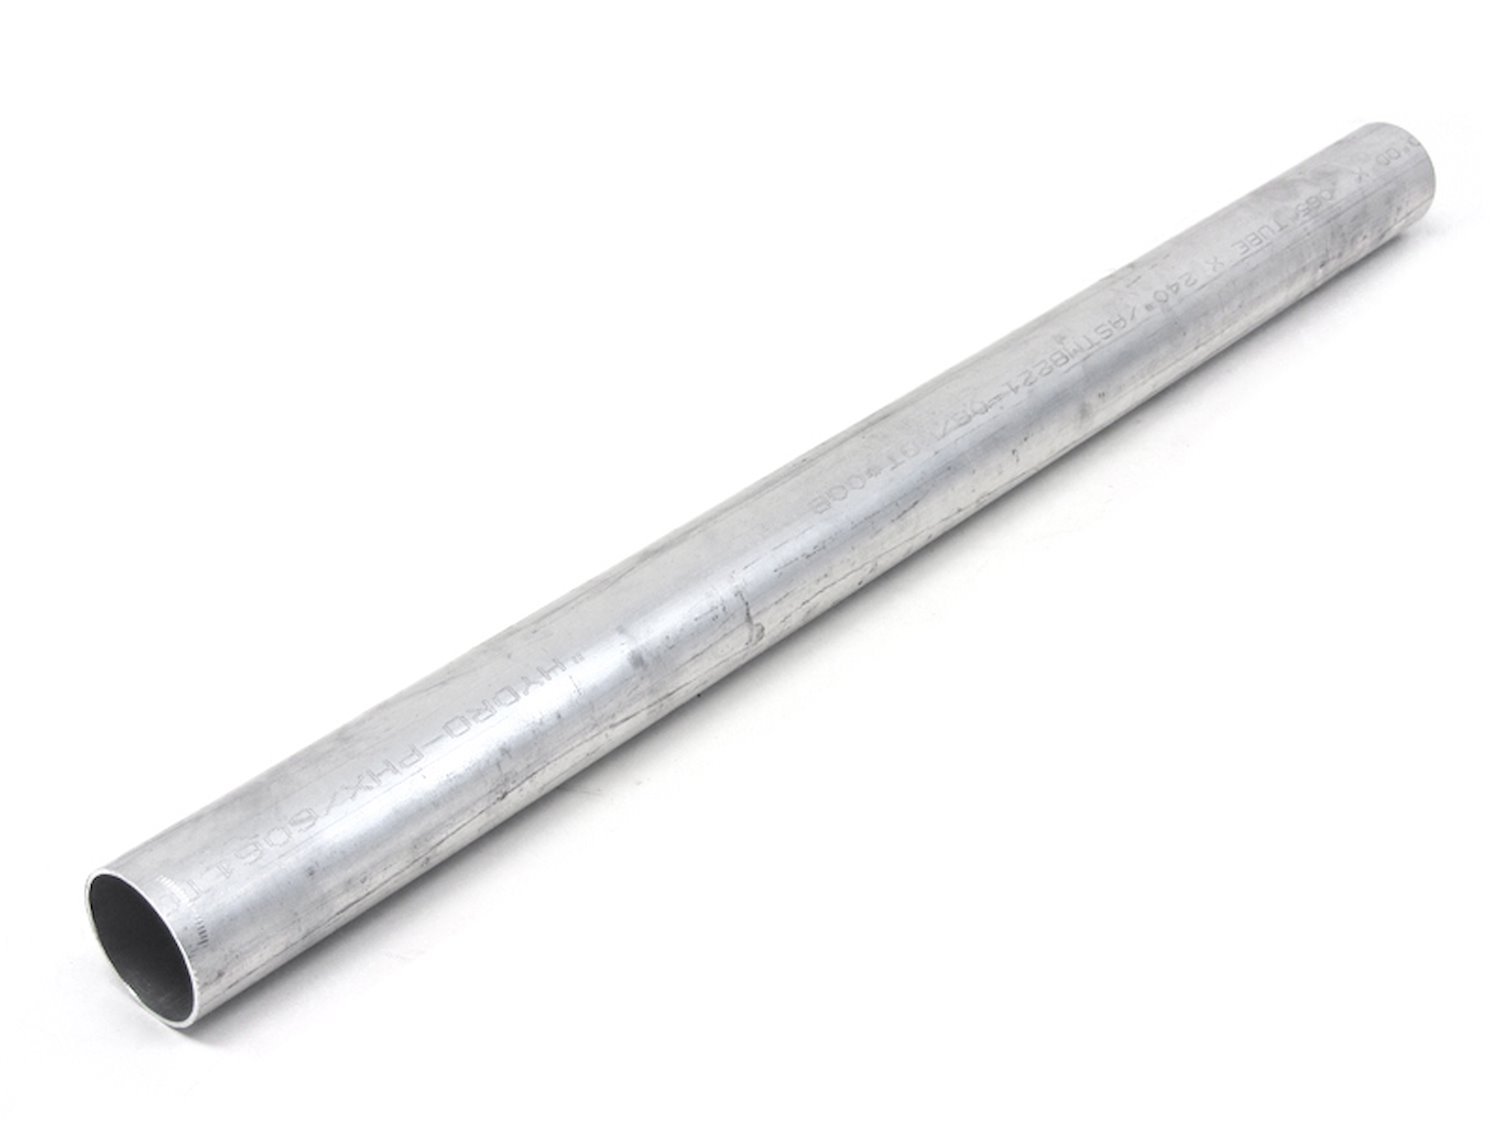 AST-2F-050 Aluminum Tubing, 6061 Aluminum, Straight Tubing, 1/2 in. OD, Seamless, Raw Finish, 2 ft. Long